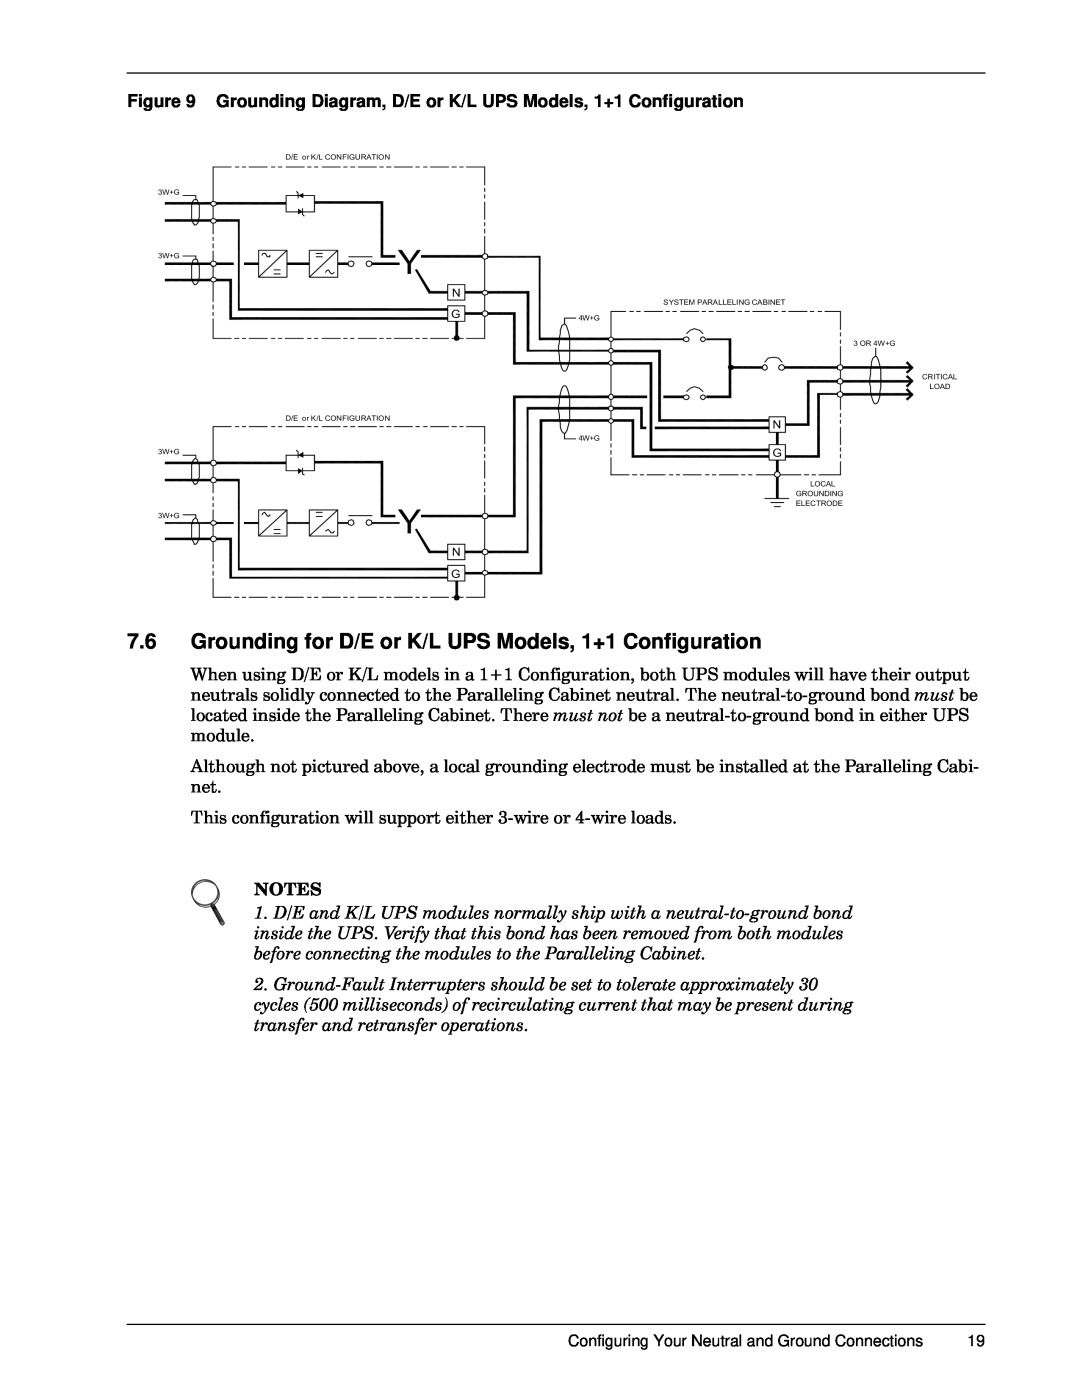 Emerson 30-130 kVA installation manual Grounding Diagram, D/E or K/L UPS Models, 1+1 Configuration, Prgxoh, 1276 